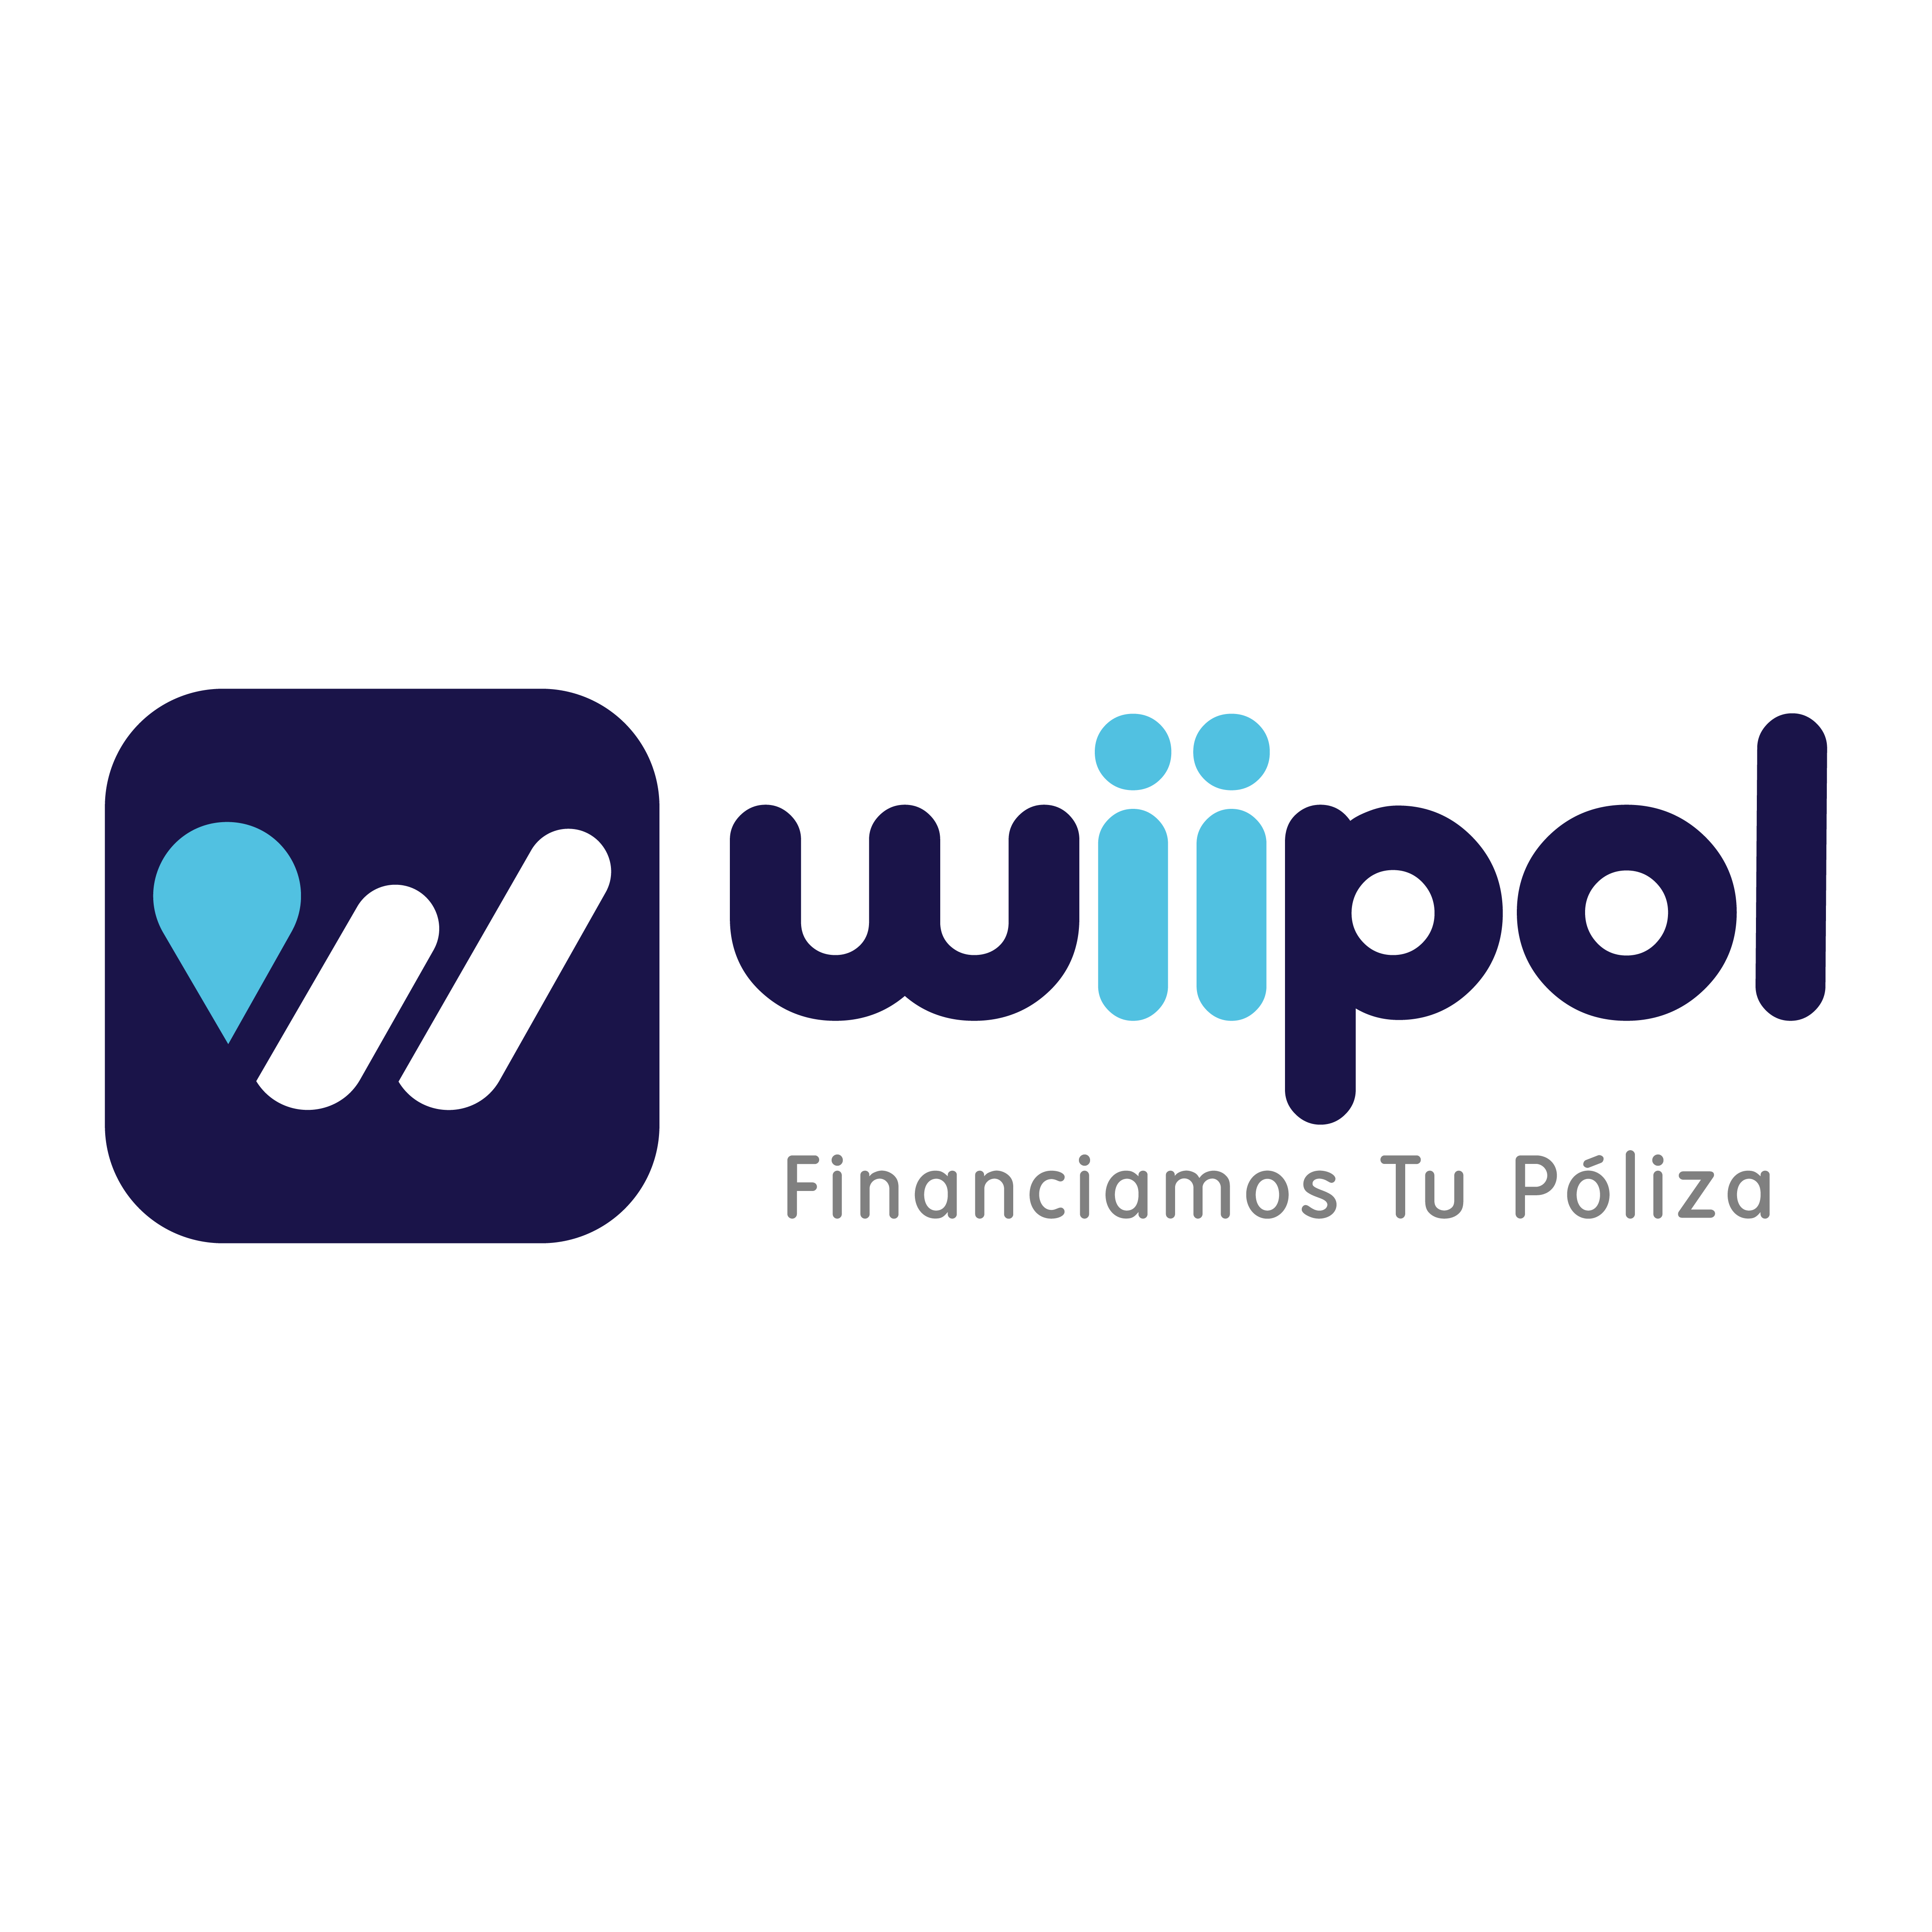 Wiipol